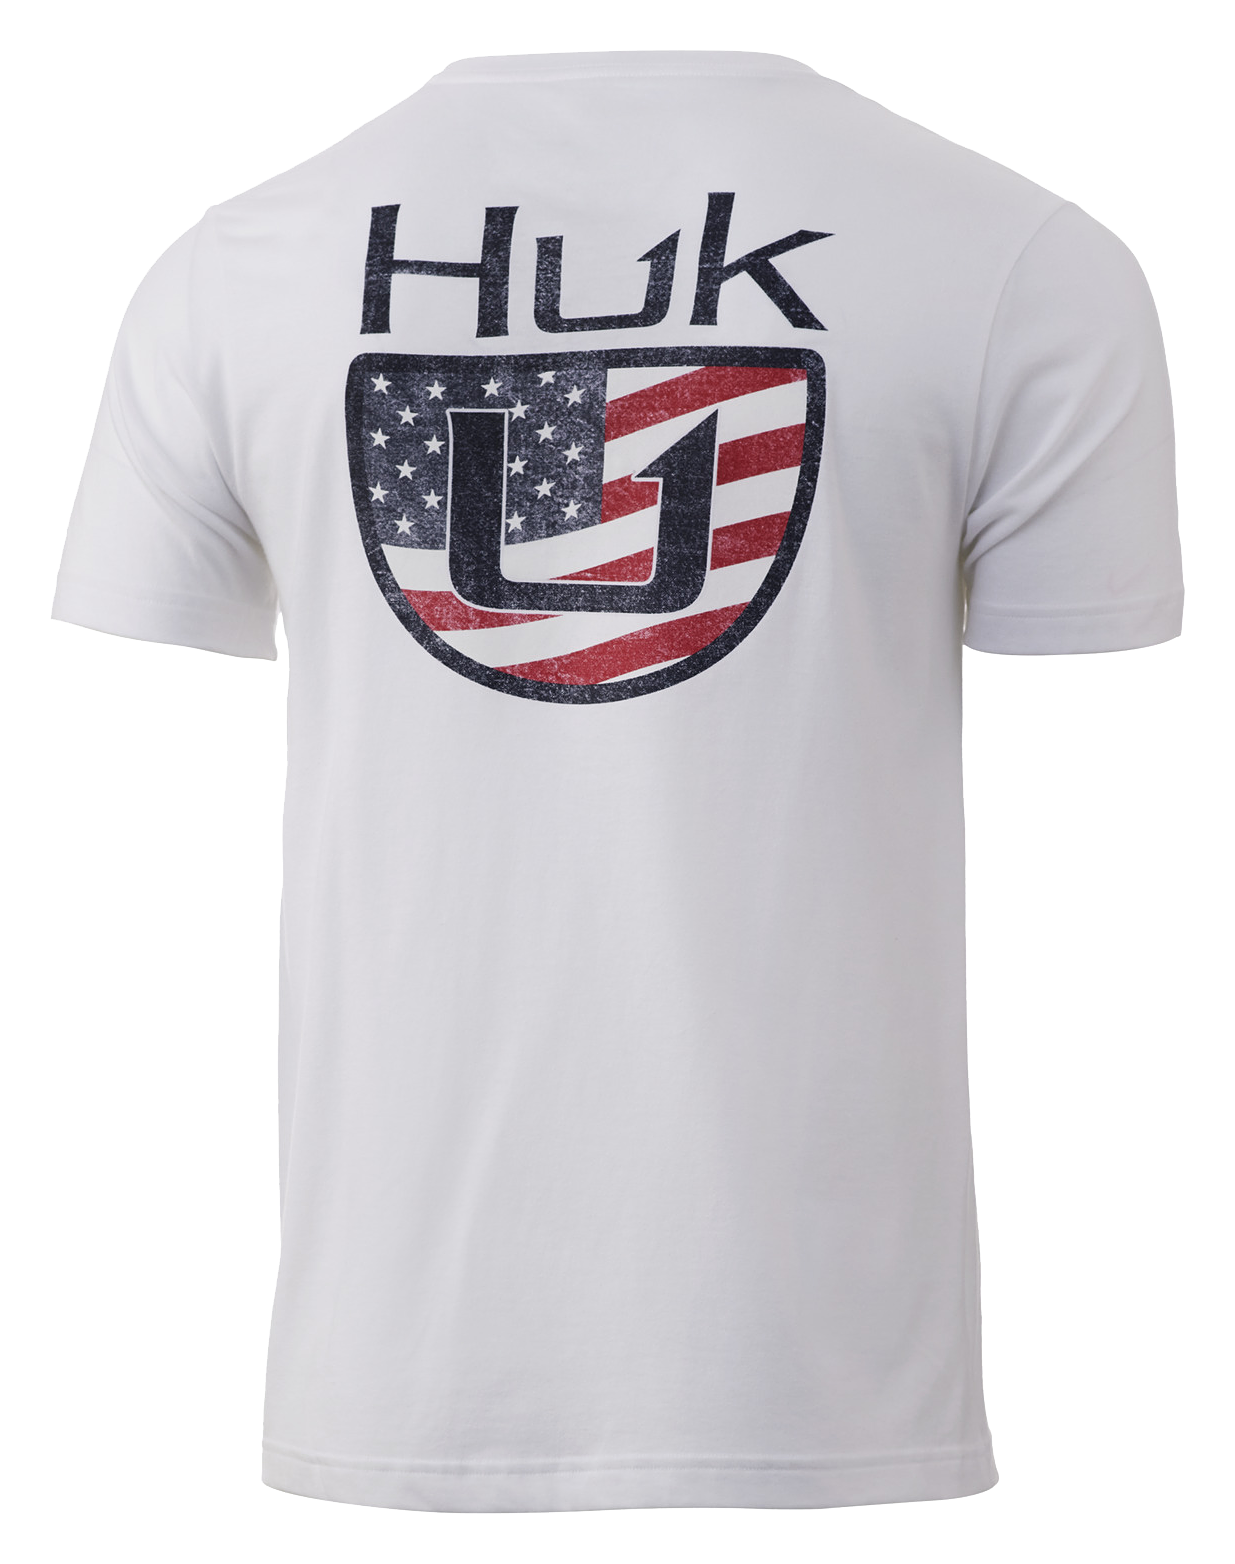 Huk Americana Wave Short-Sleeve T-Shirt for Men